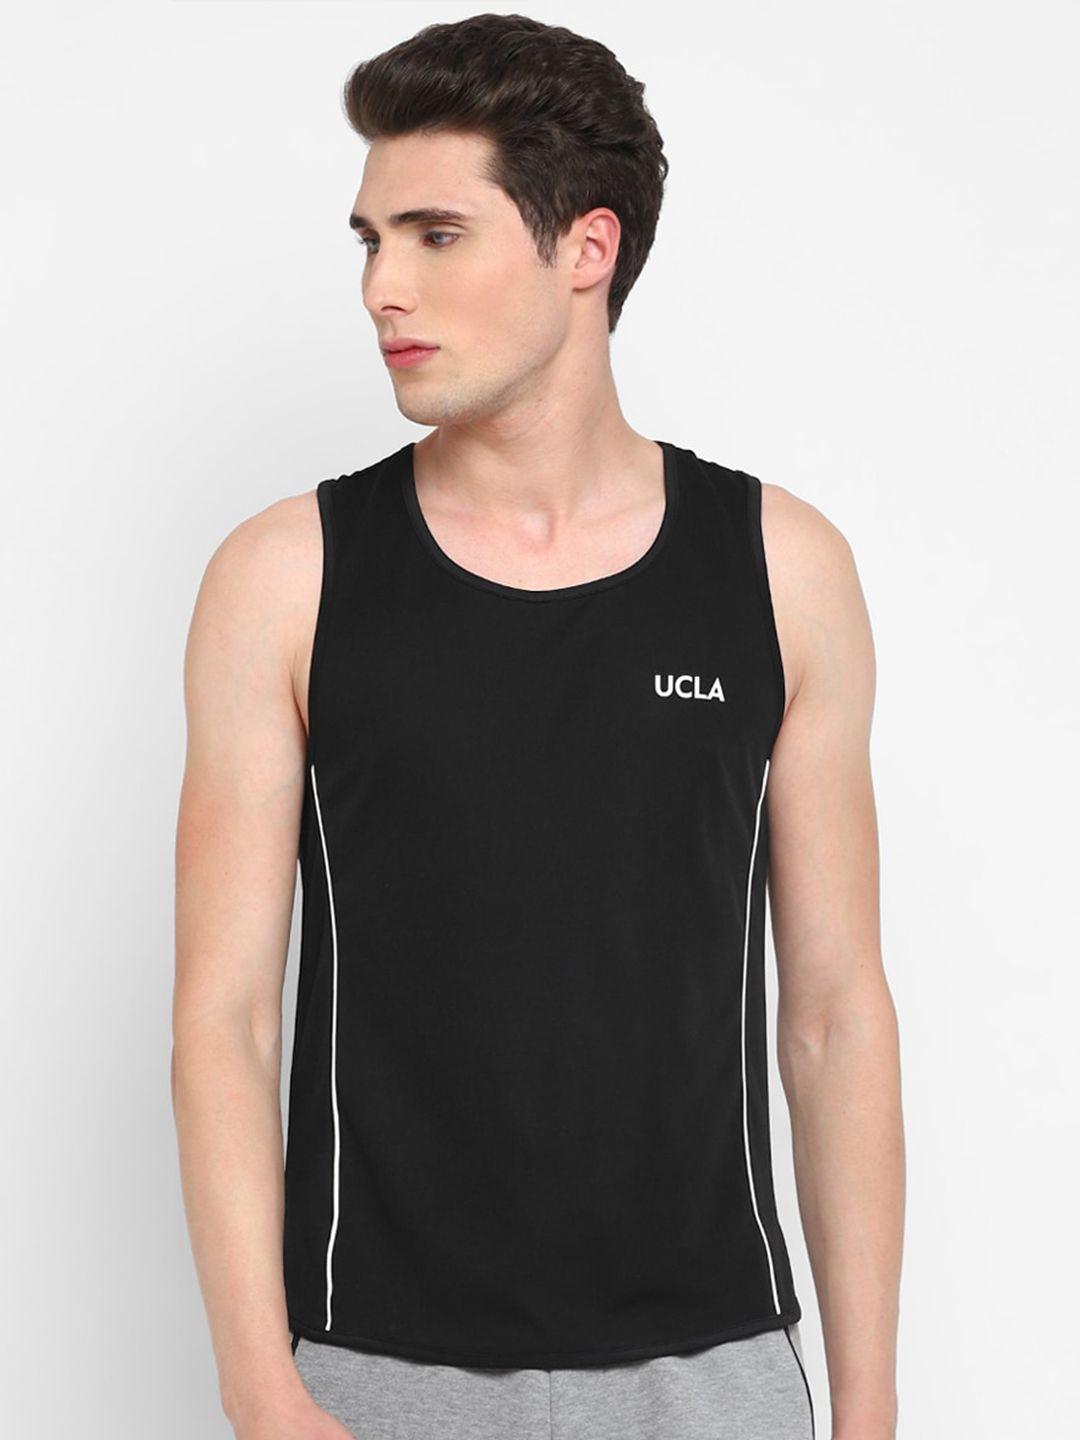 ucla men antimicrobial sports sleeveless t-shirt